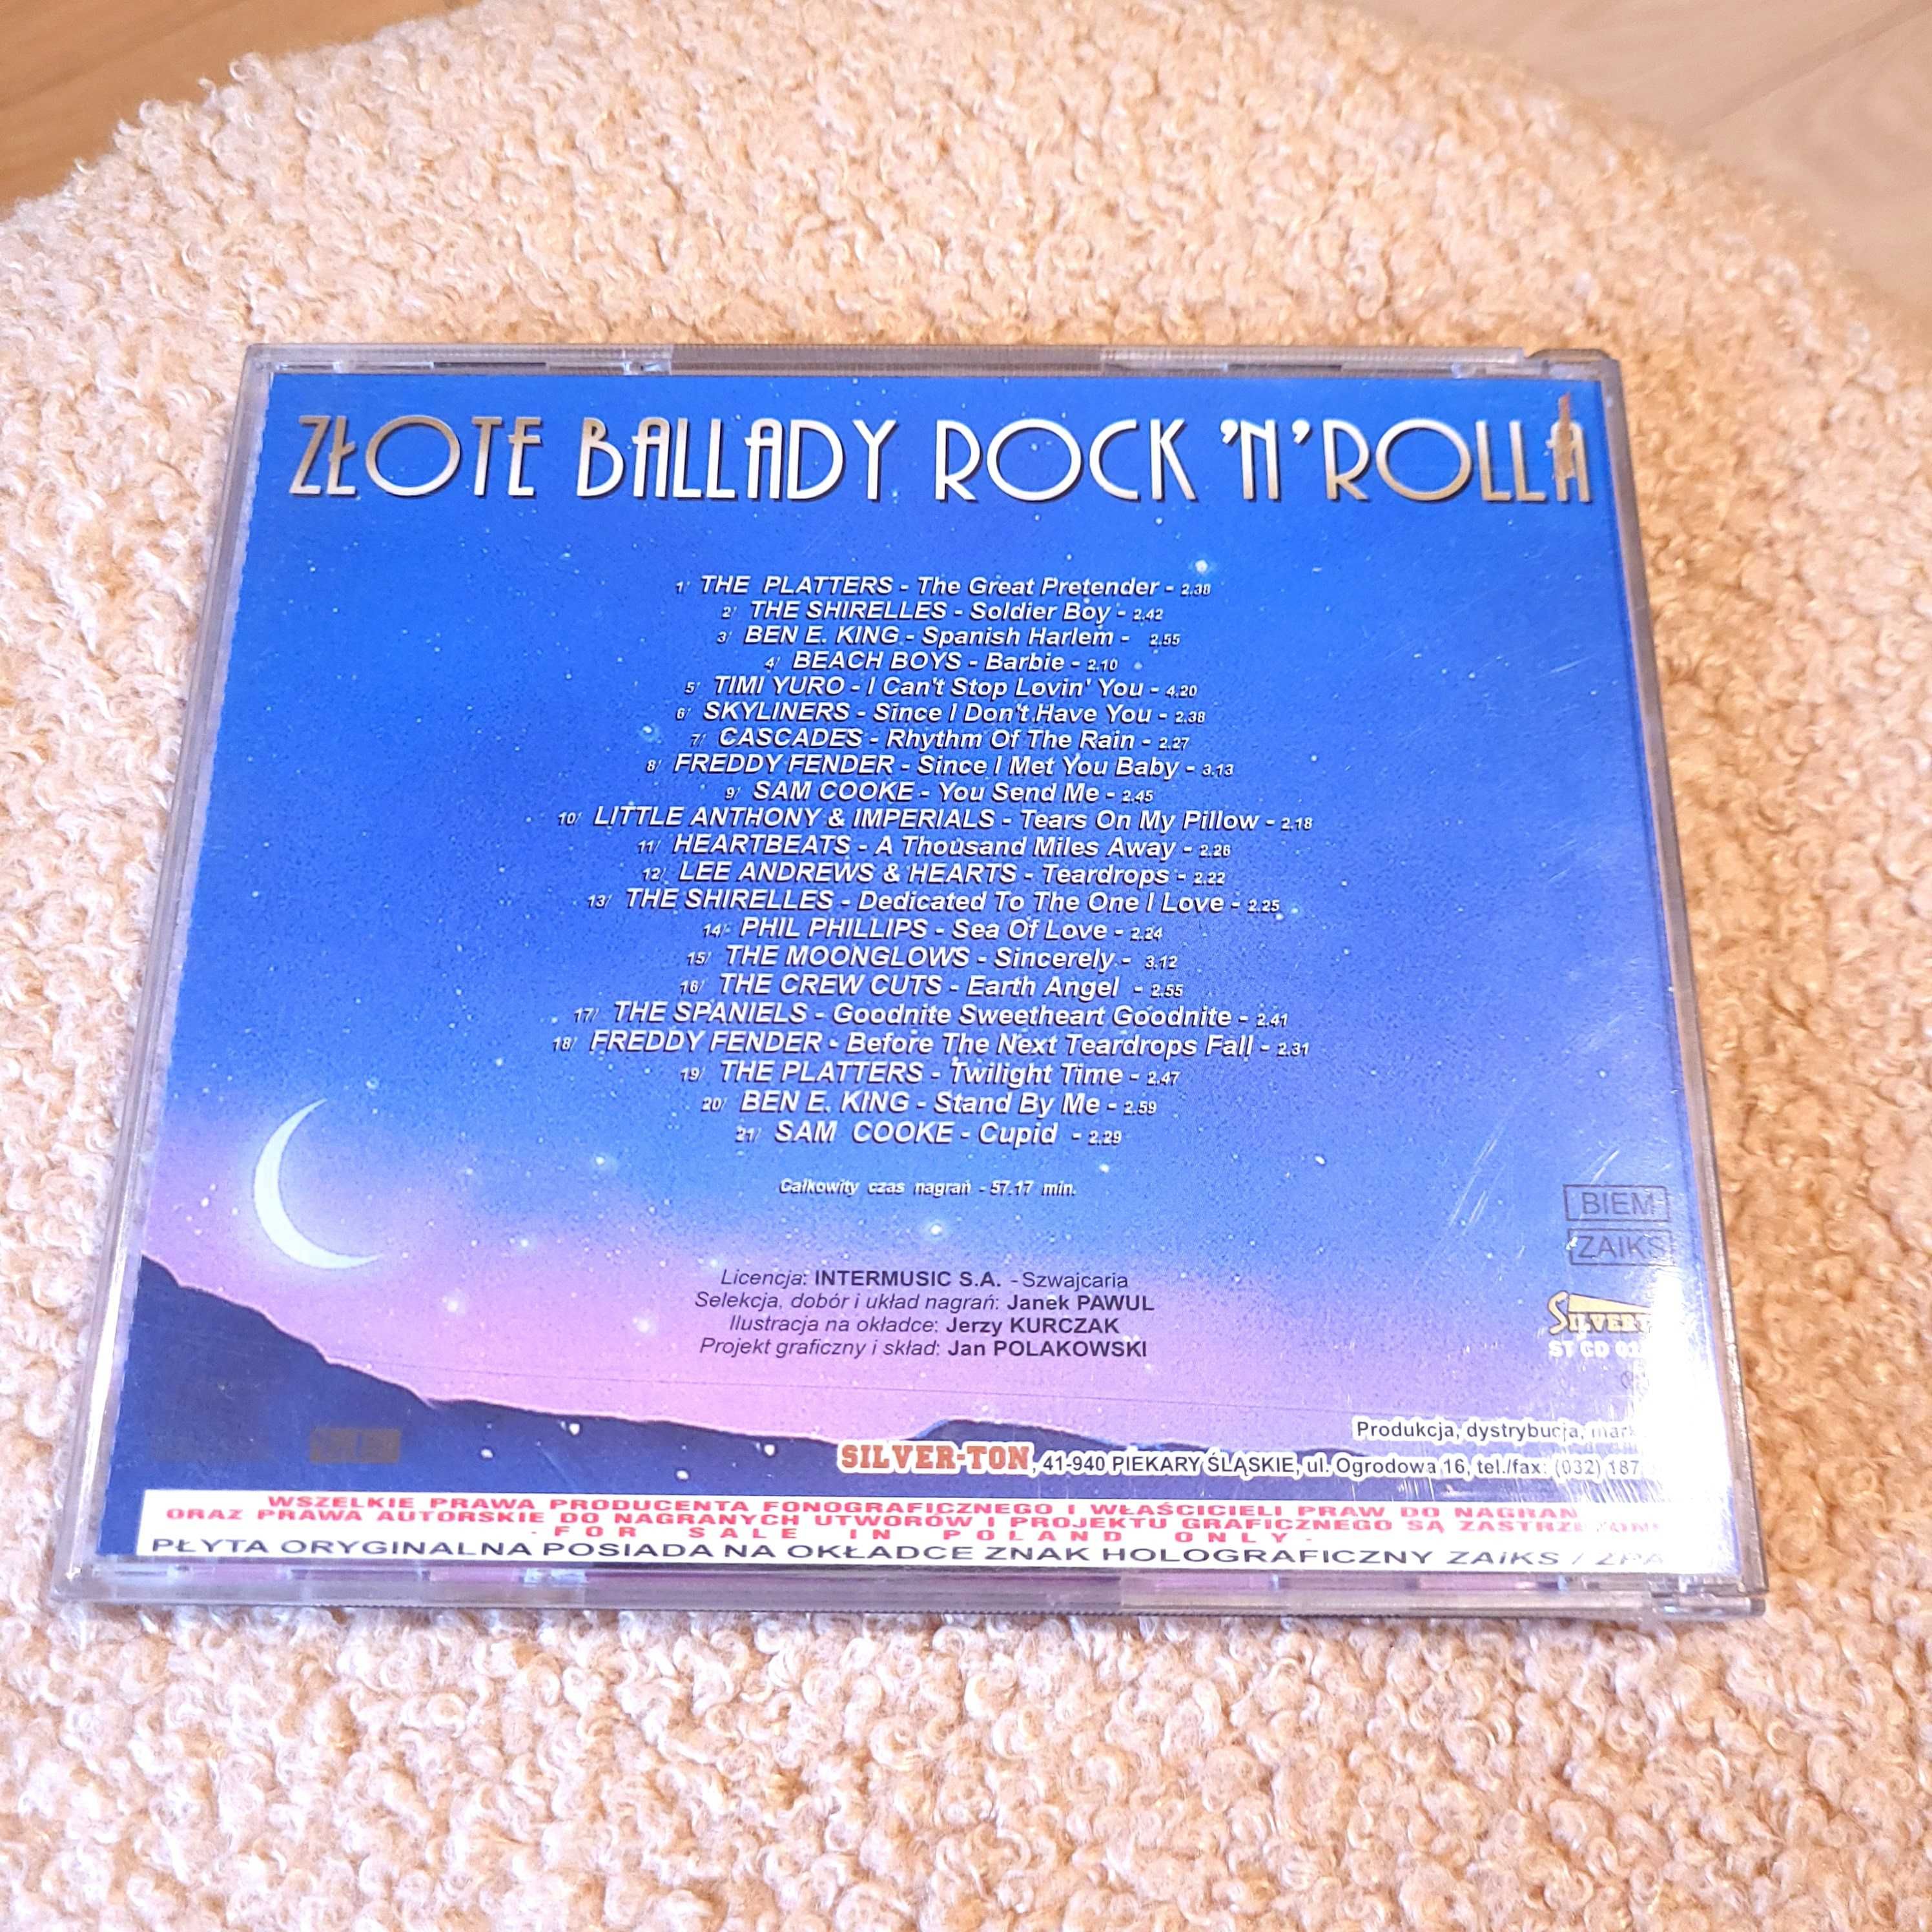 Złote ballady rock and rolla płyta CD